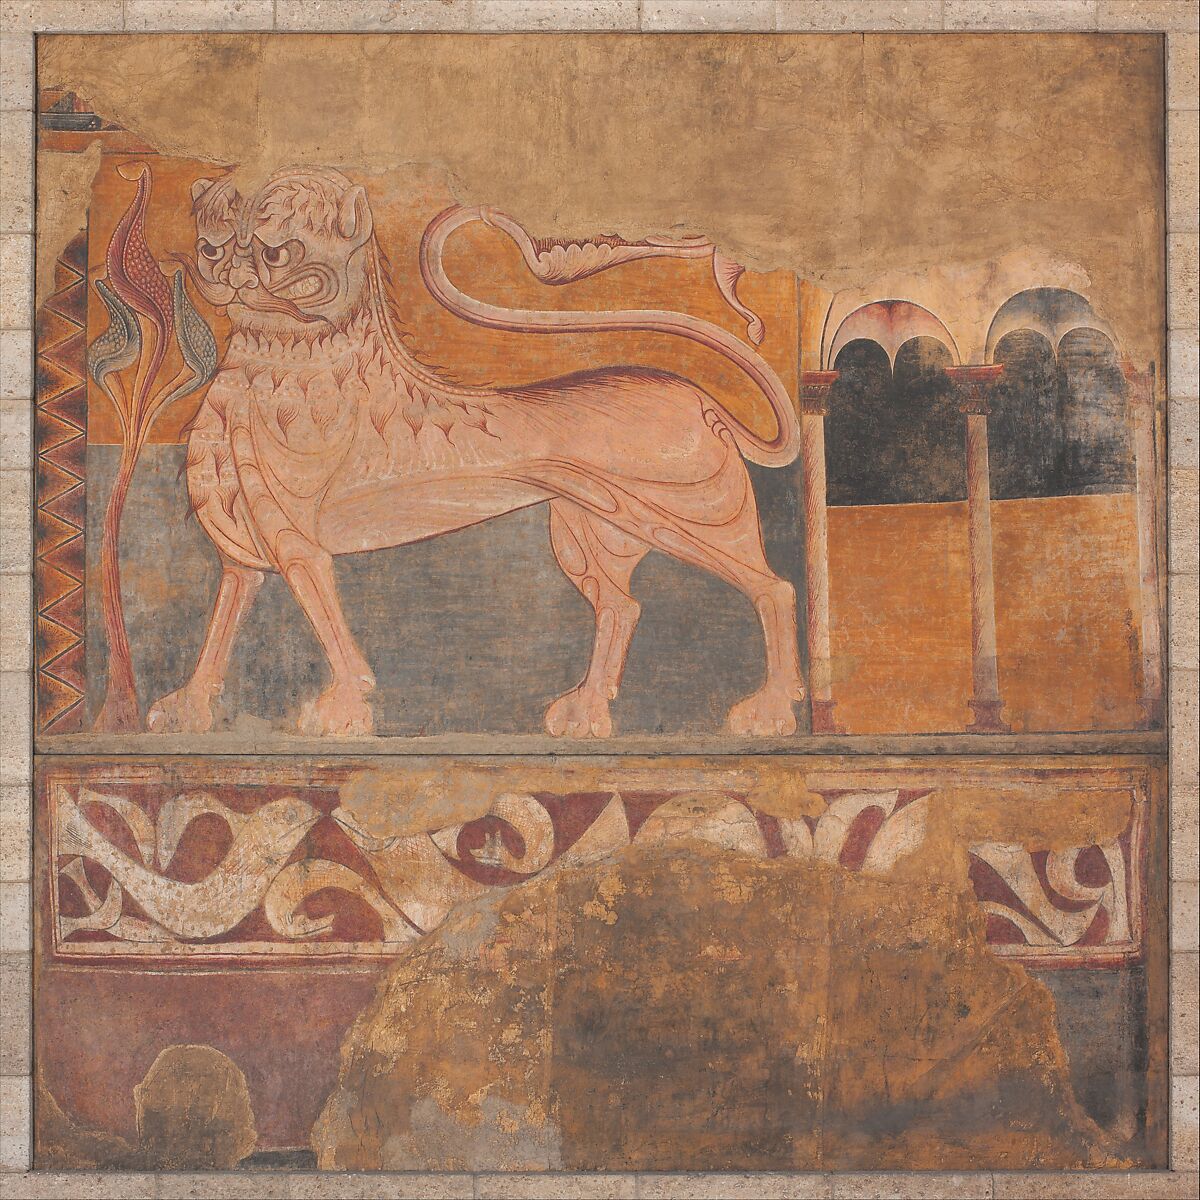 Lion, Fresco, mounted on canvas, Spanish 